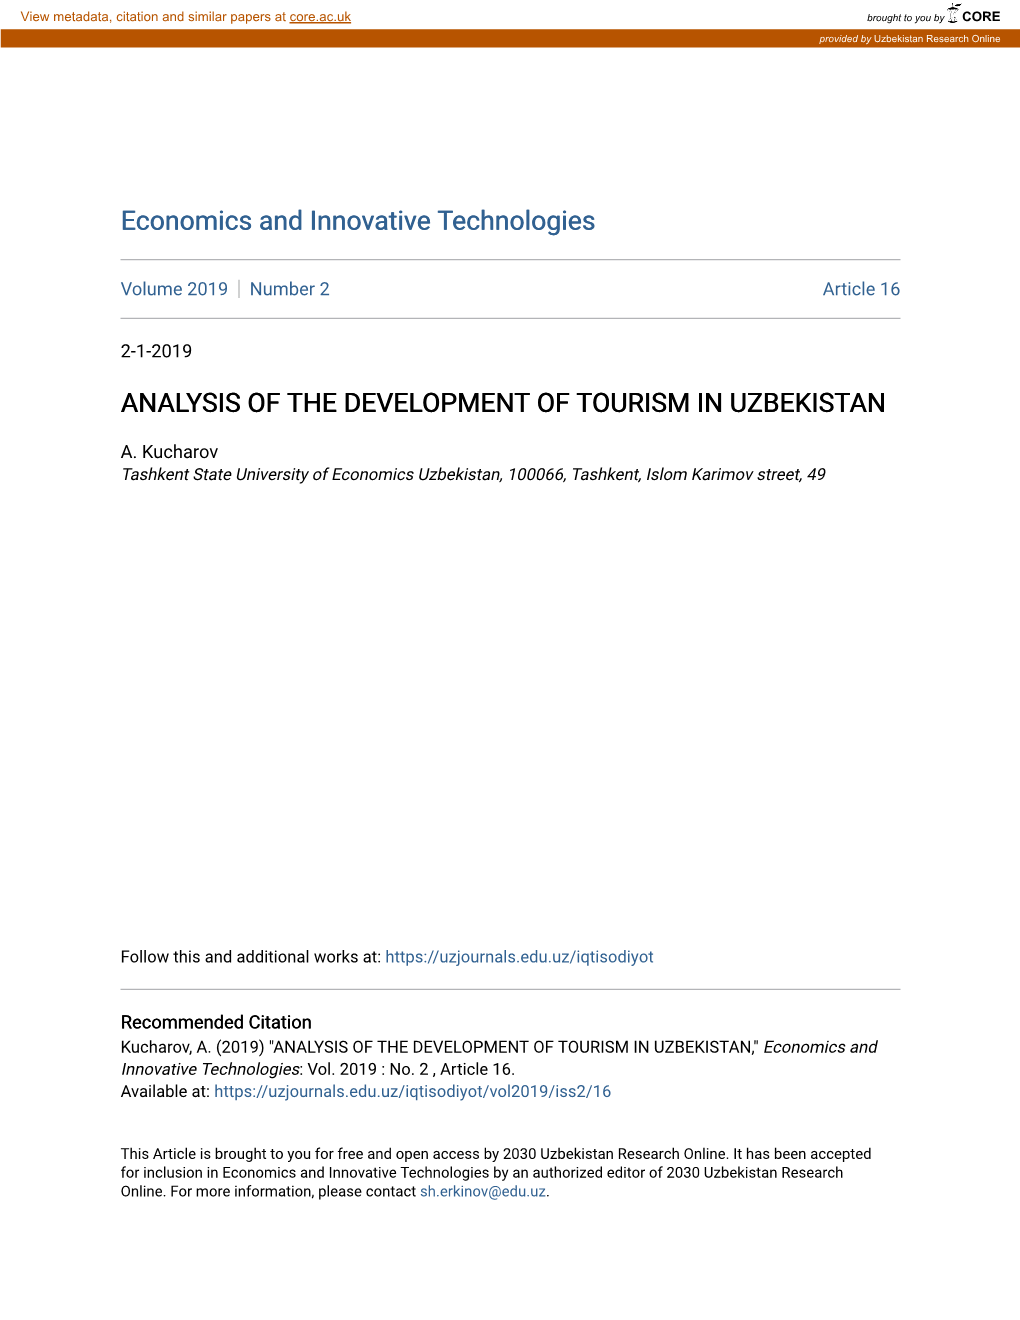 Analysis of the Development of Tourism in Uzbekistan